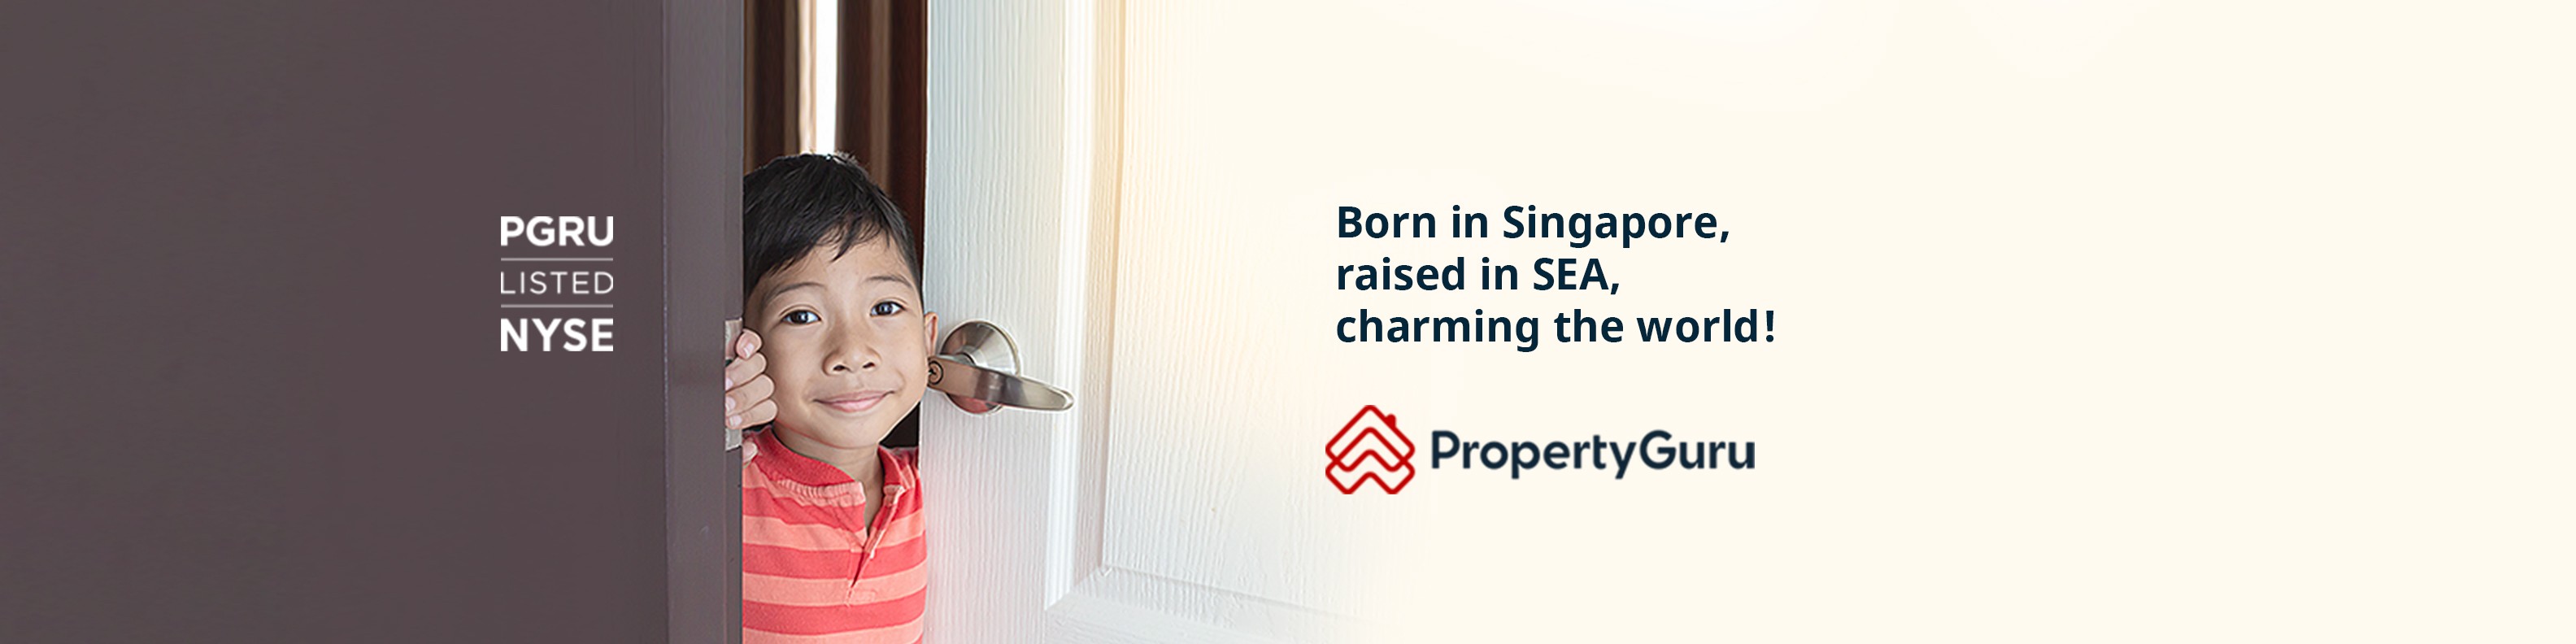 Propertyguru singapore